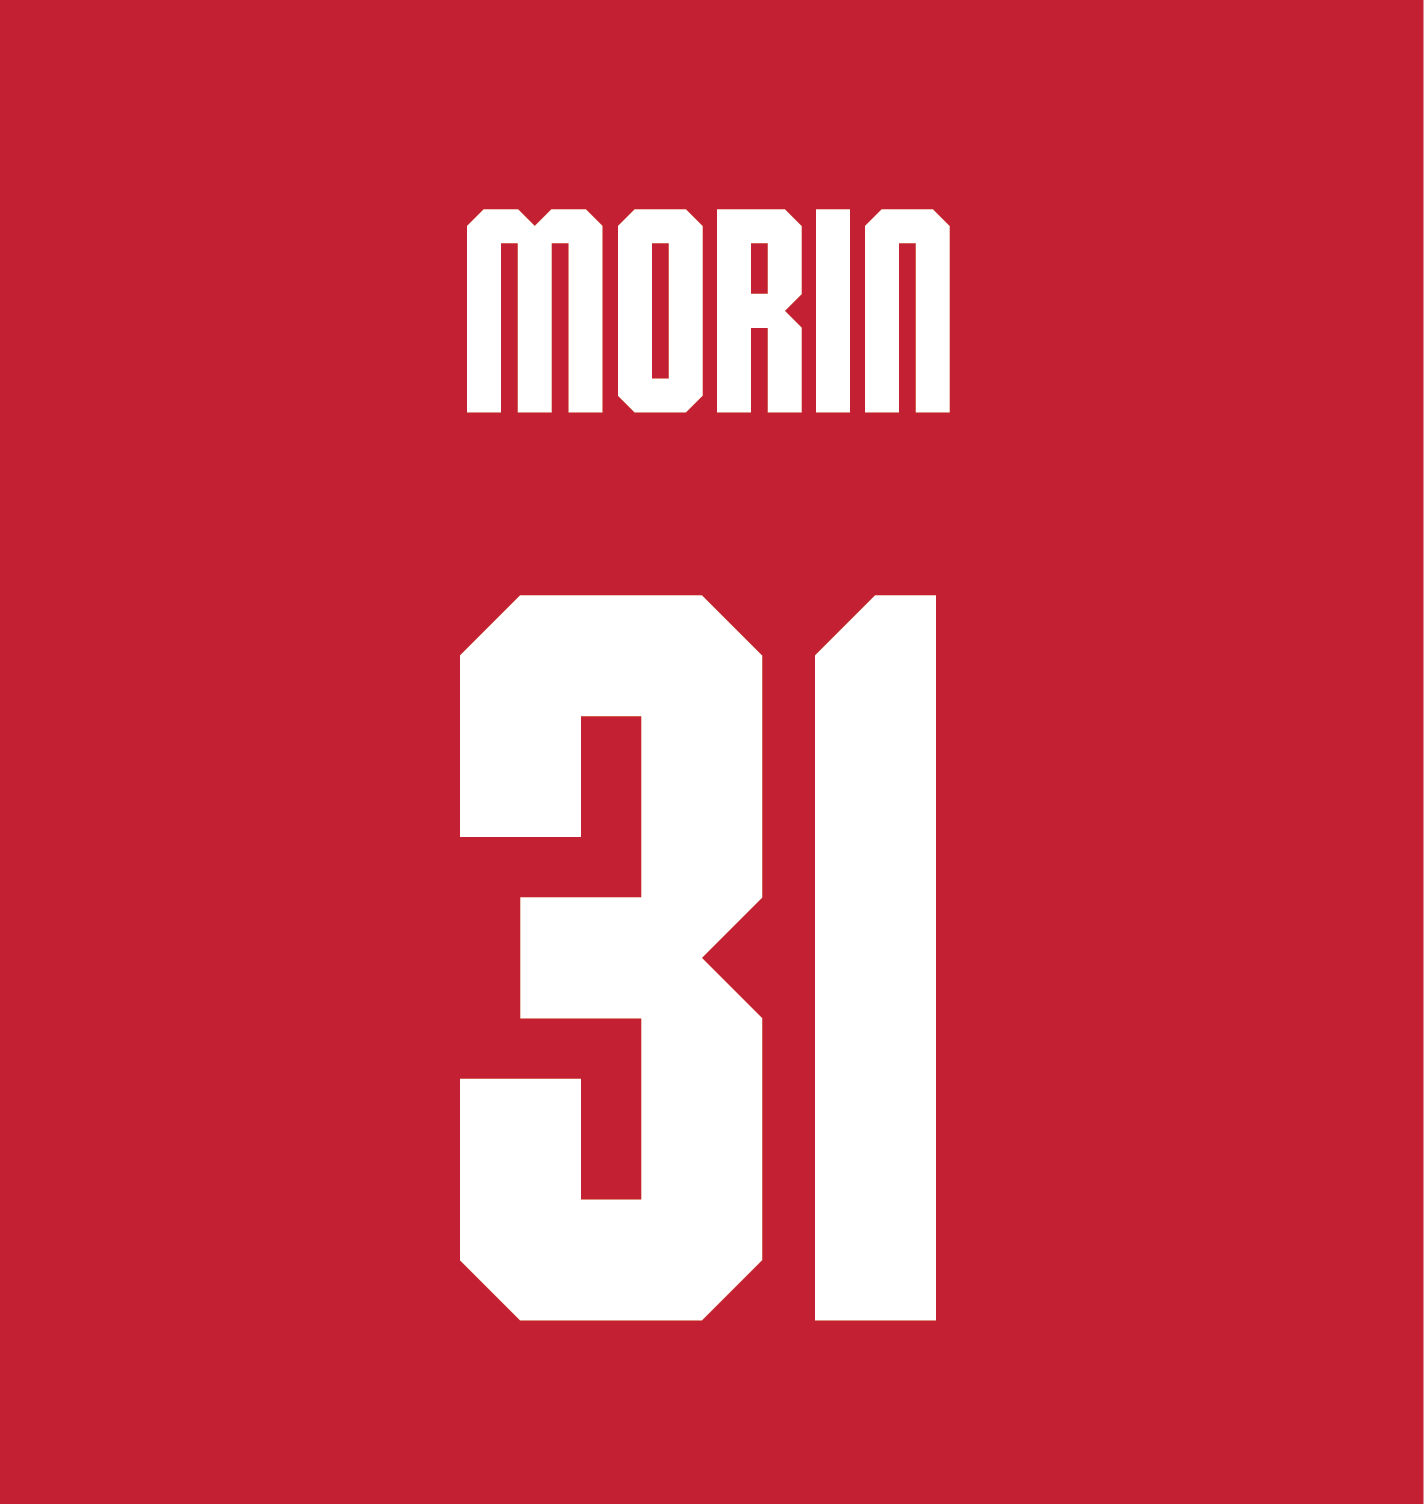 Jacob Morin | #31